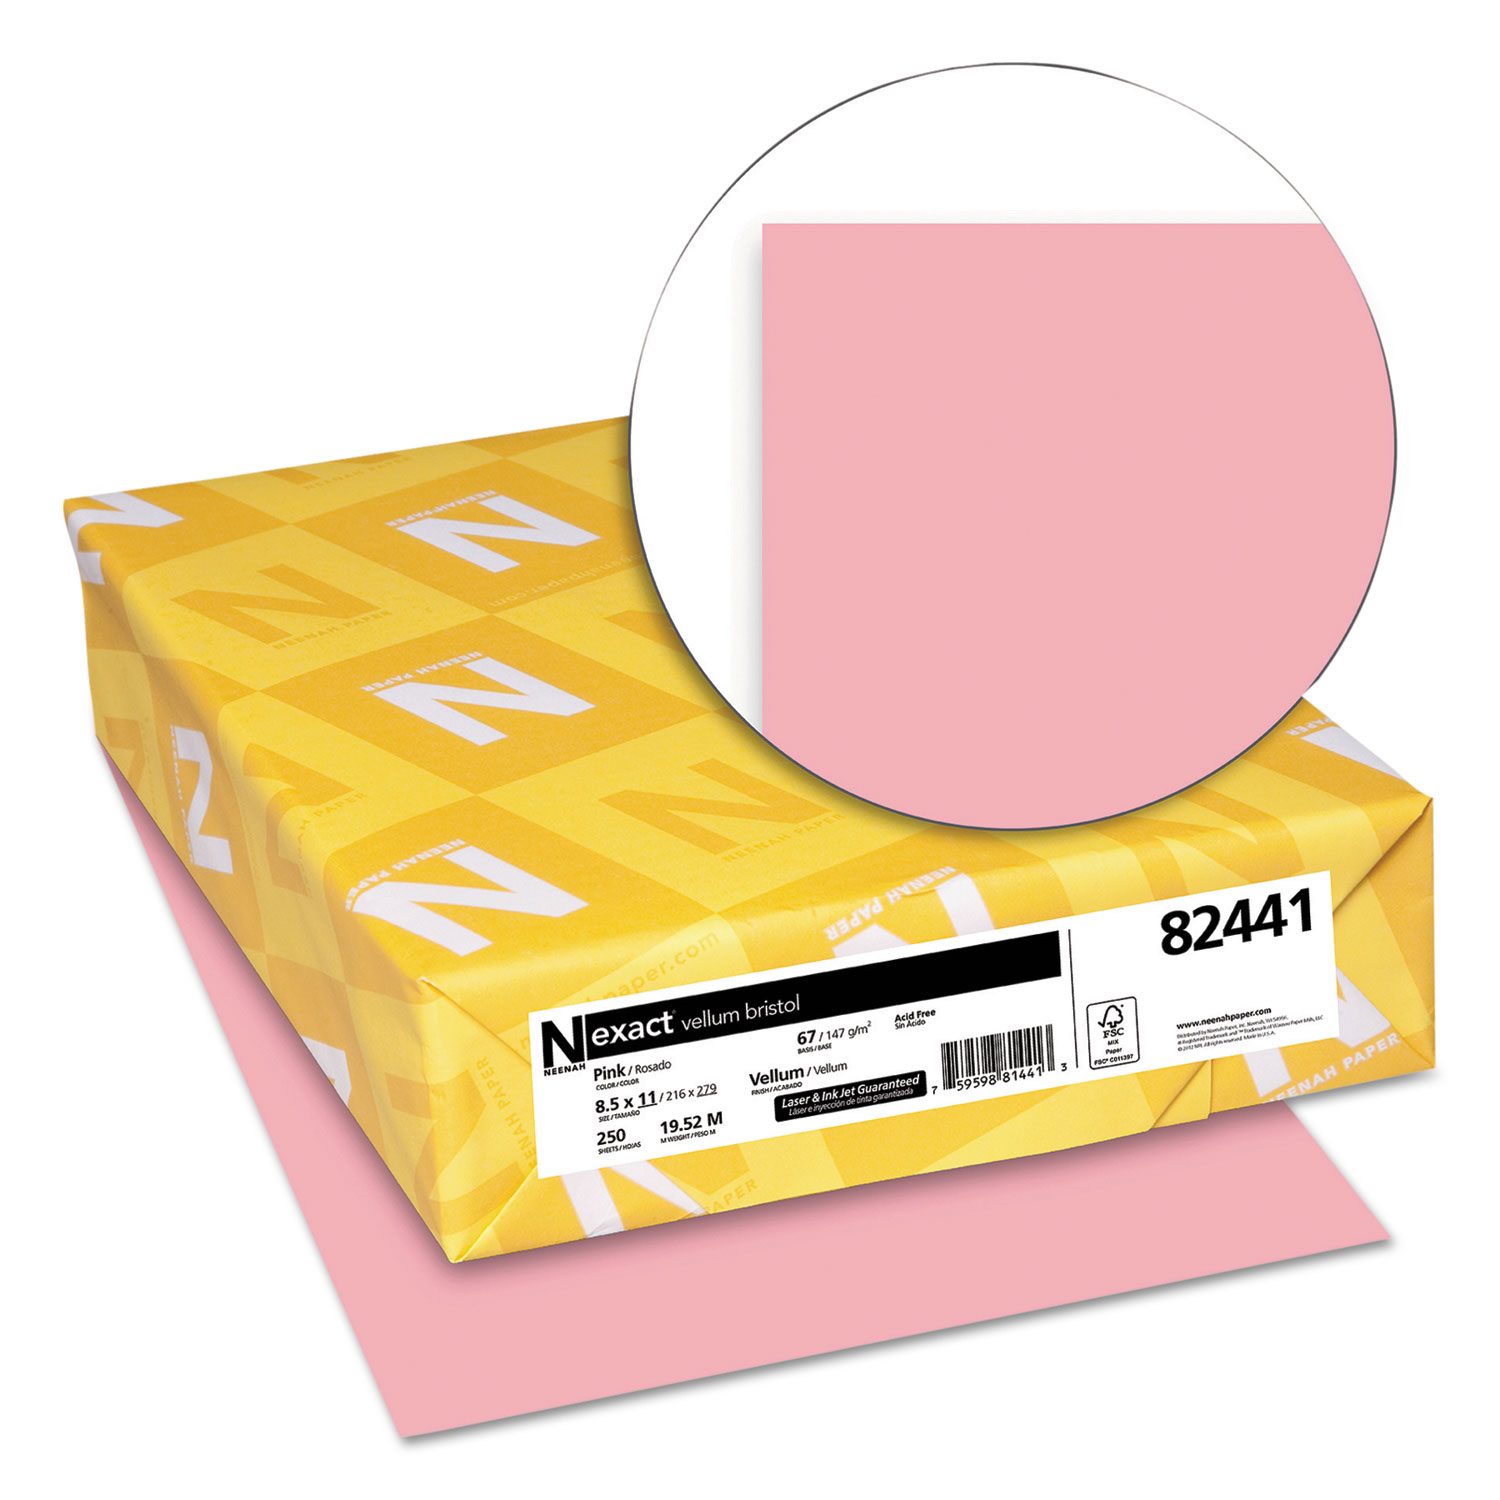 Exact Vellum Bristol Cover Stock, 67lb, 8 1/2 x 11, Pink, 250 Sheets